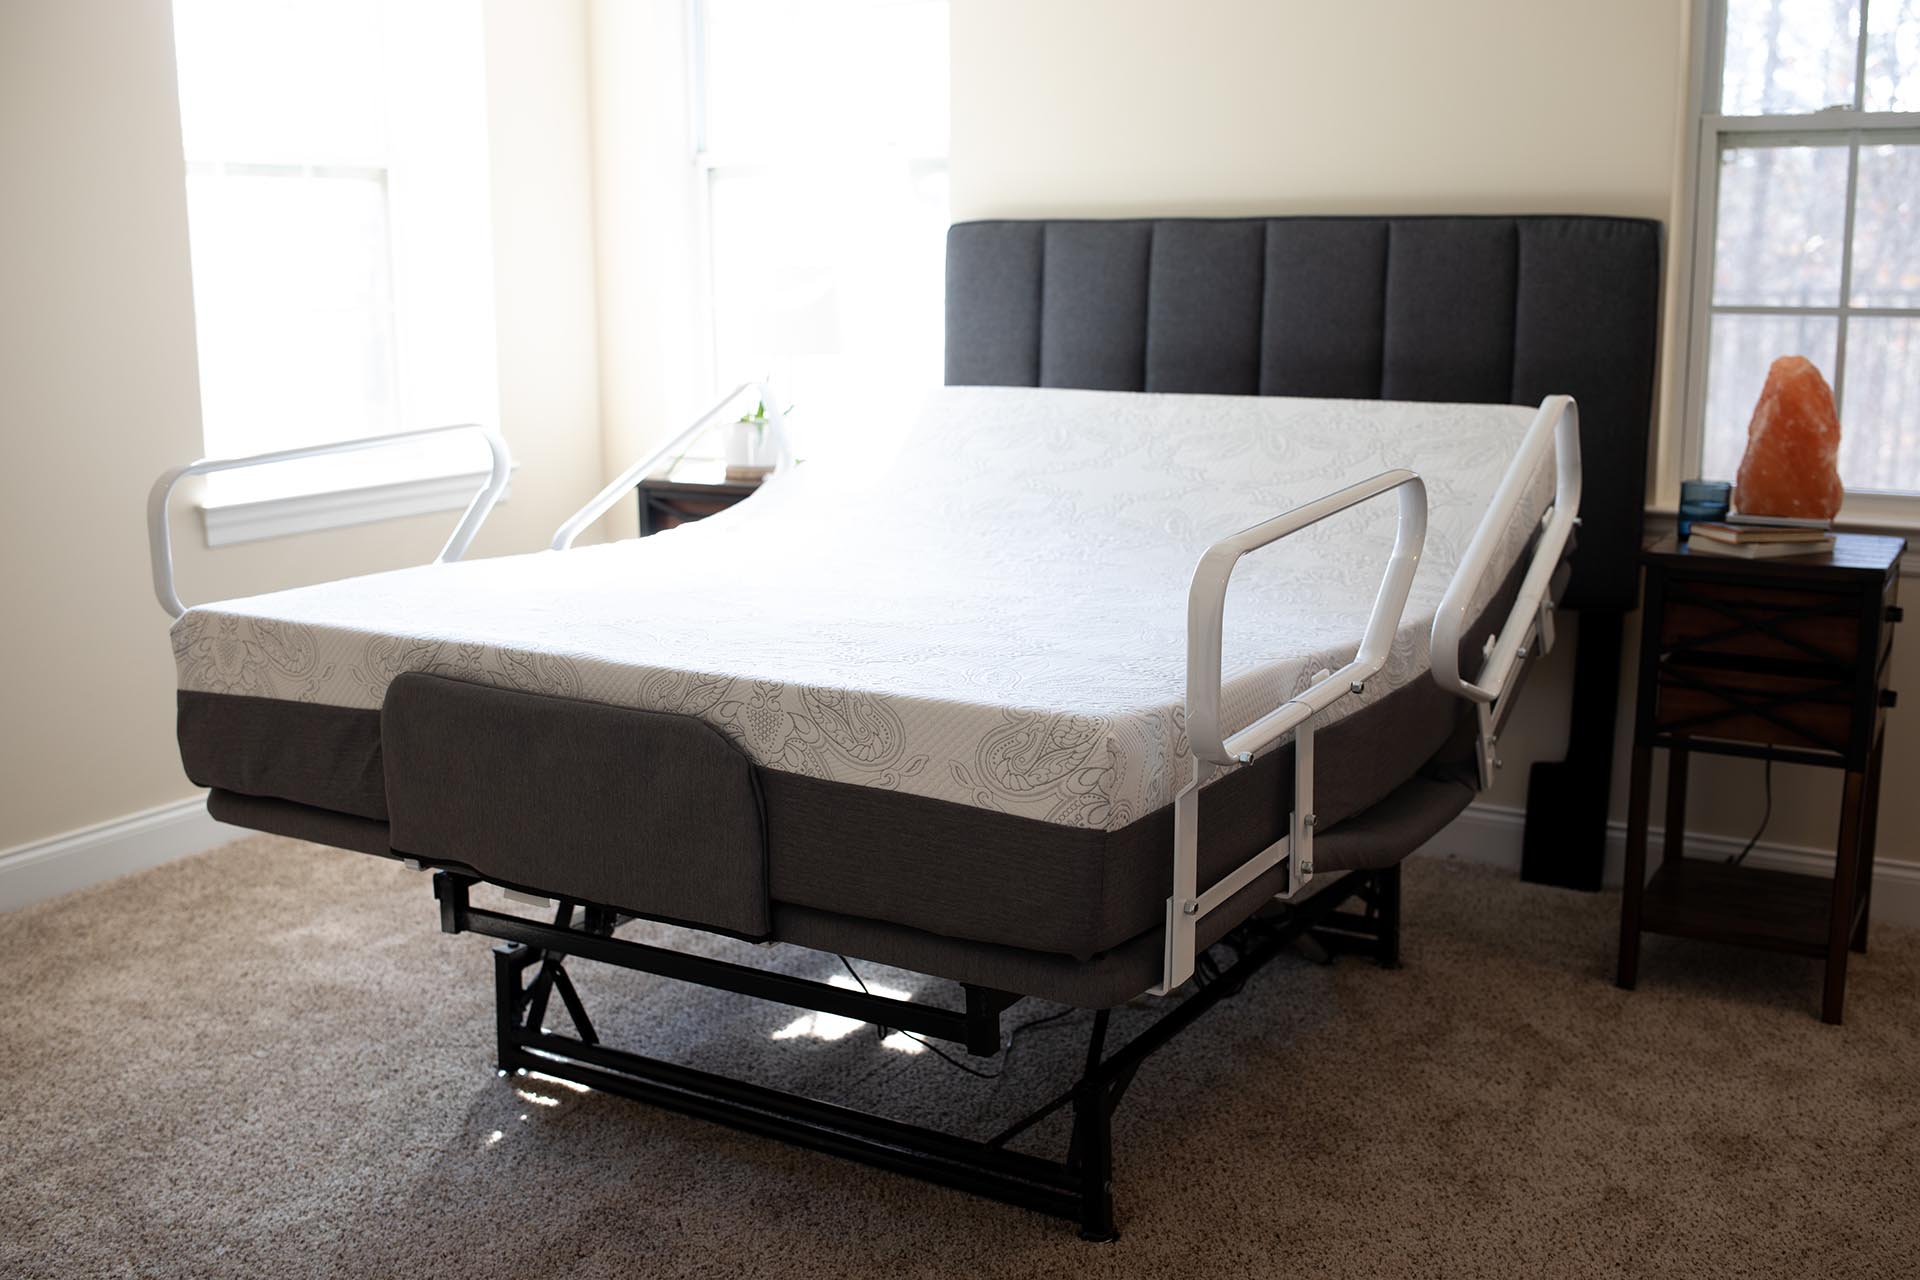 Chula Vista flexabed 3 motor high low fully electric hospital adjustable bed latex mattress